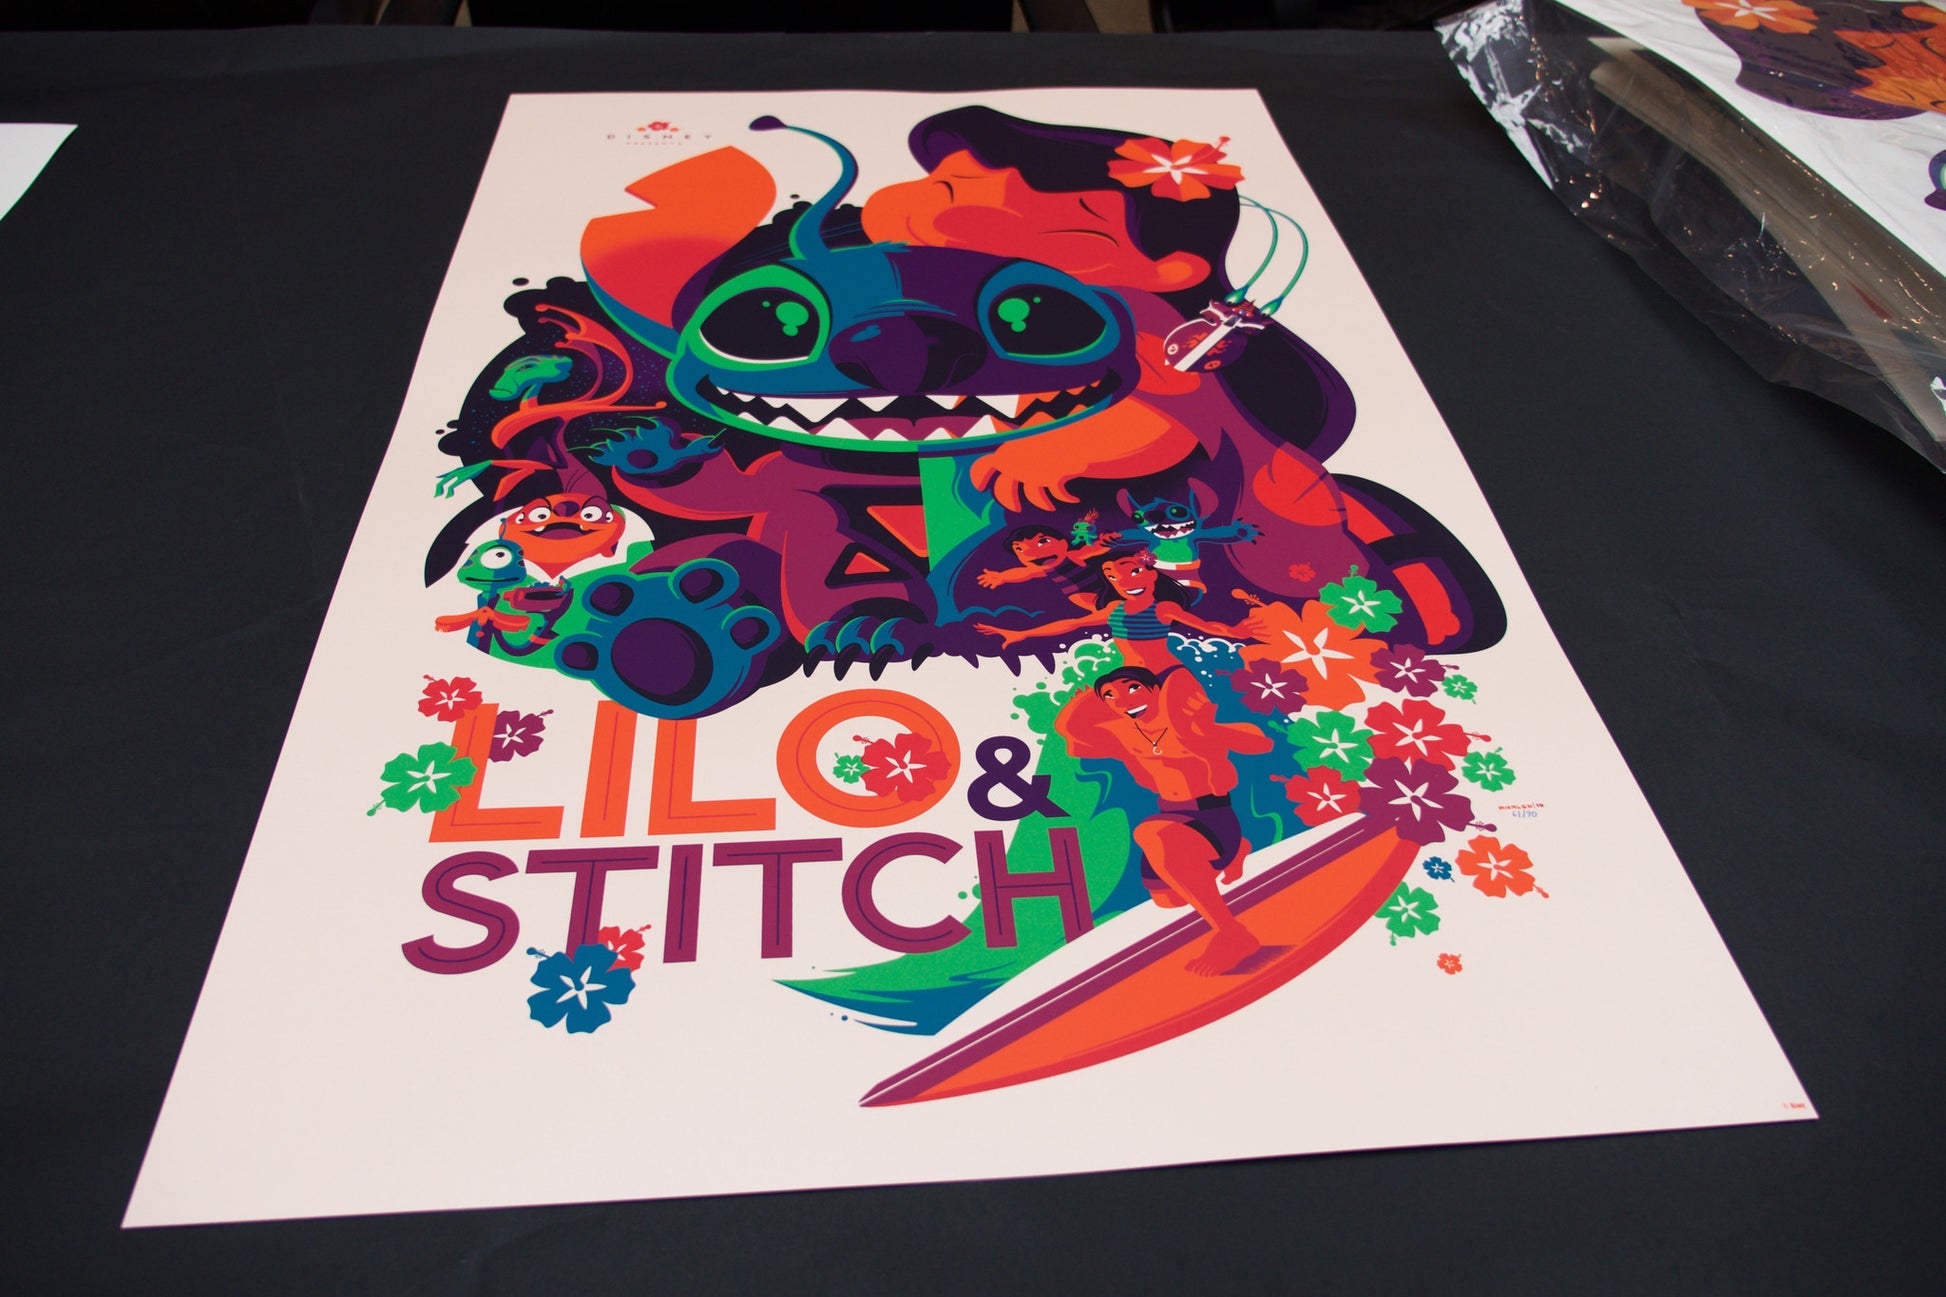 Lilo & Stitch by Daniel Arriaga